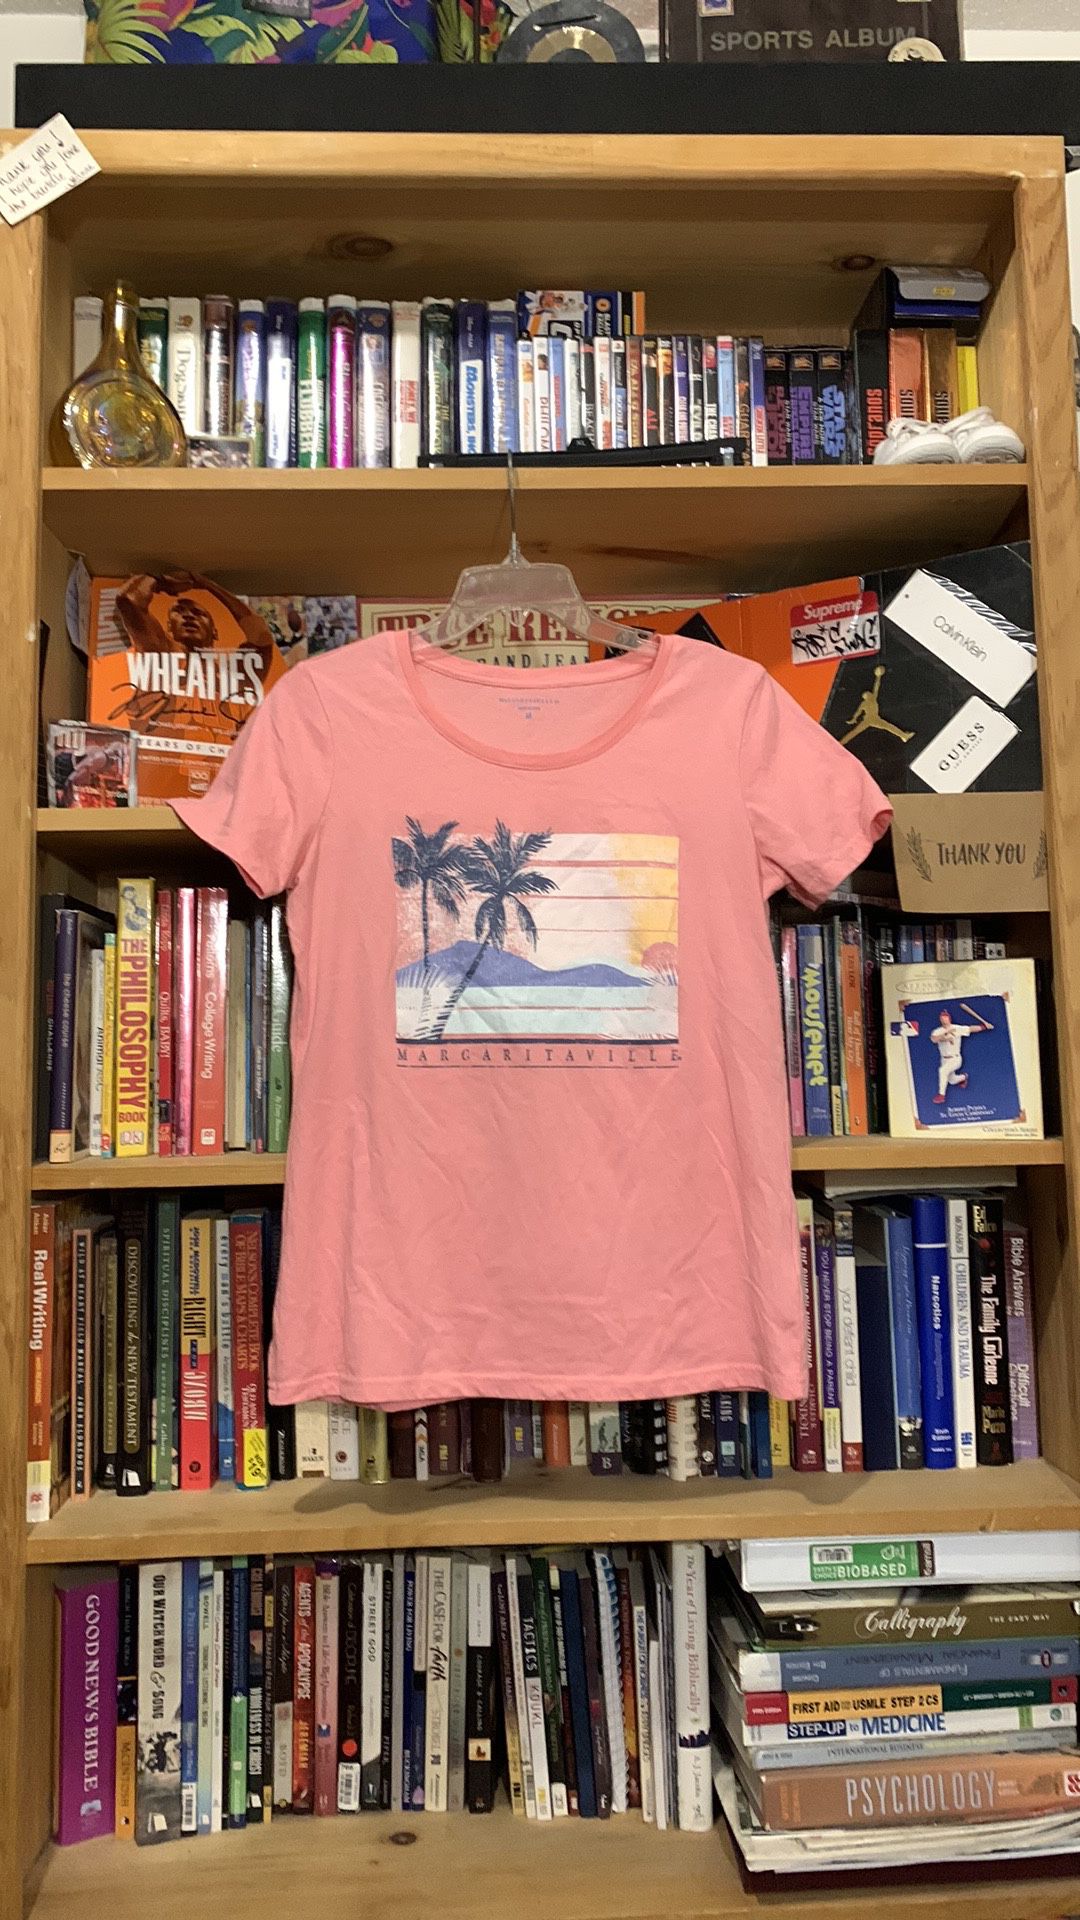 MARGARITAVILLE-women’s pink short sleeve graphic tee-shirt